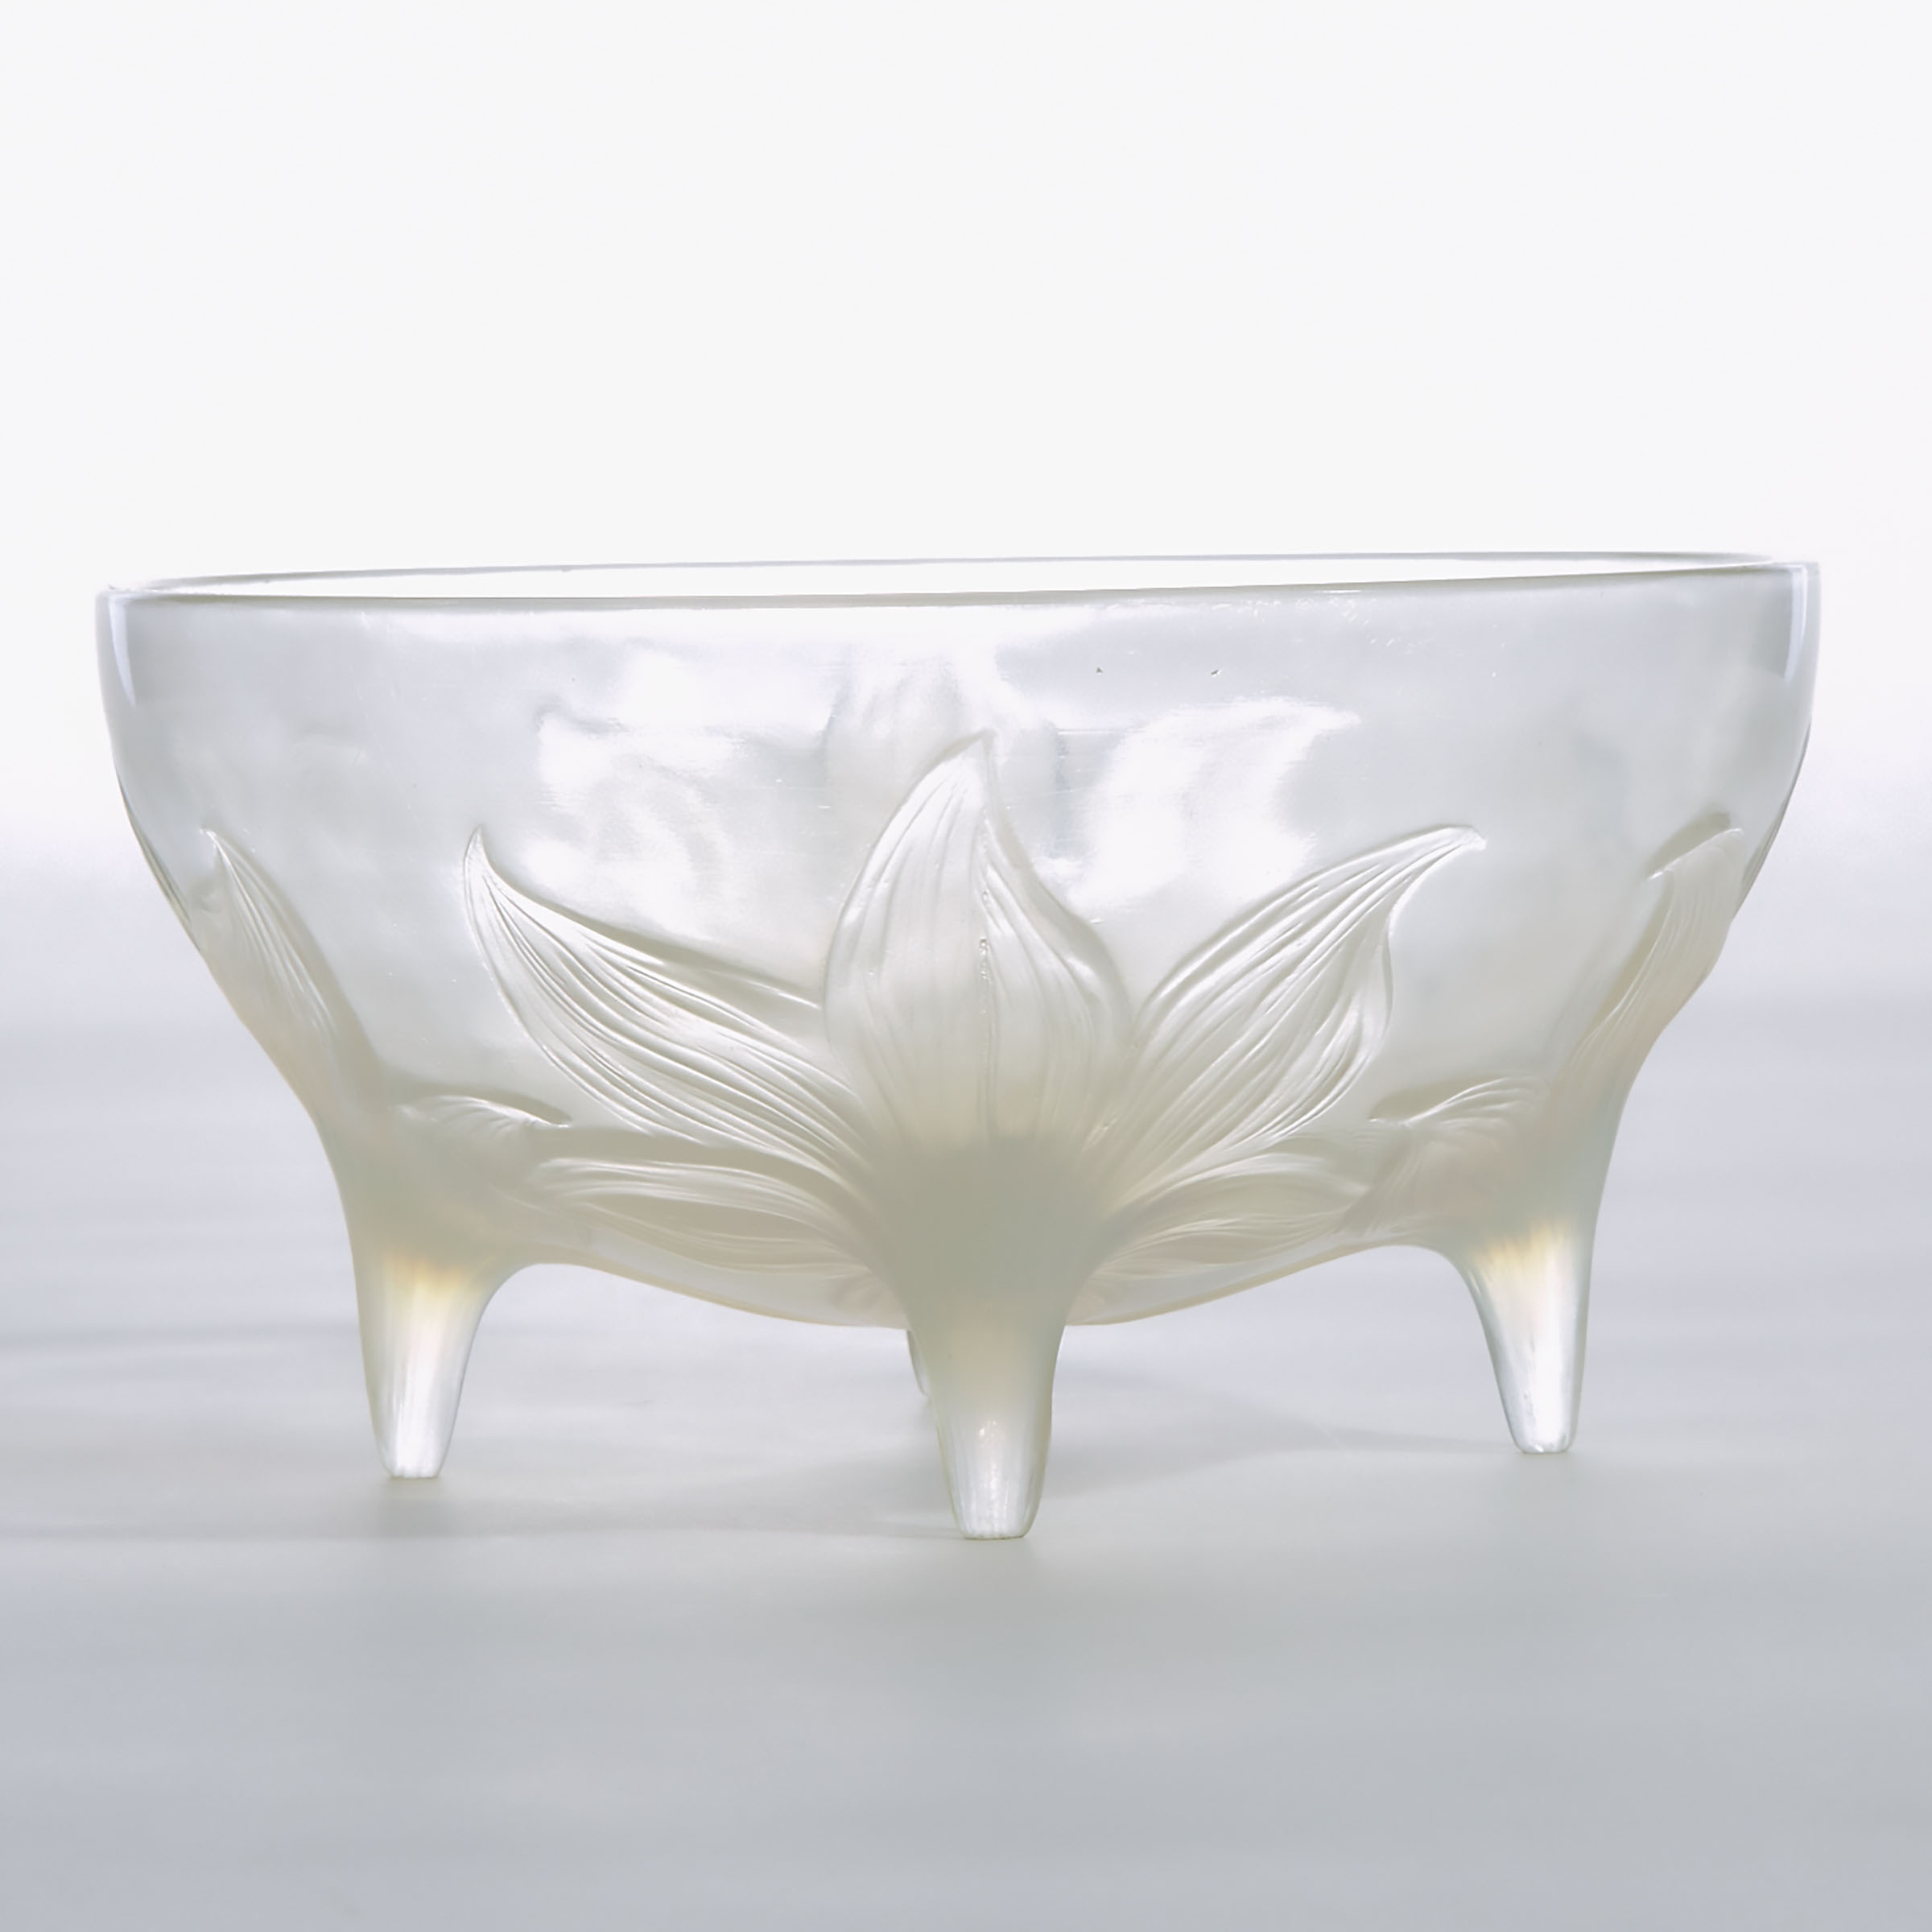 ‘Lys’, Lalique Moulded Opalescent Glass Bowl, 1920s